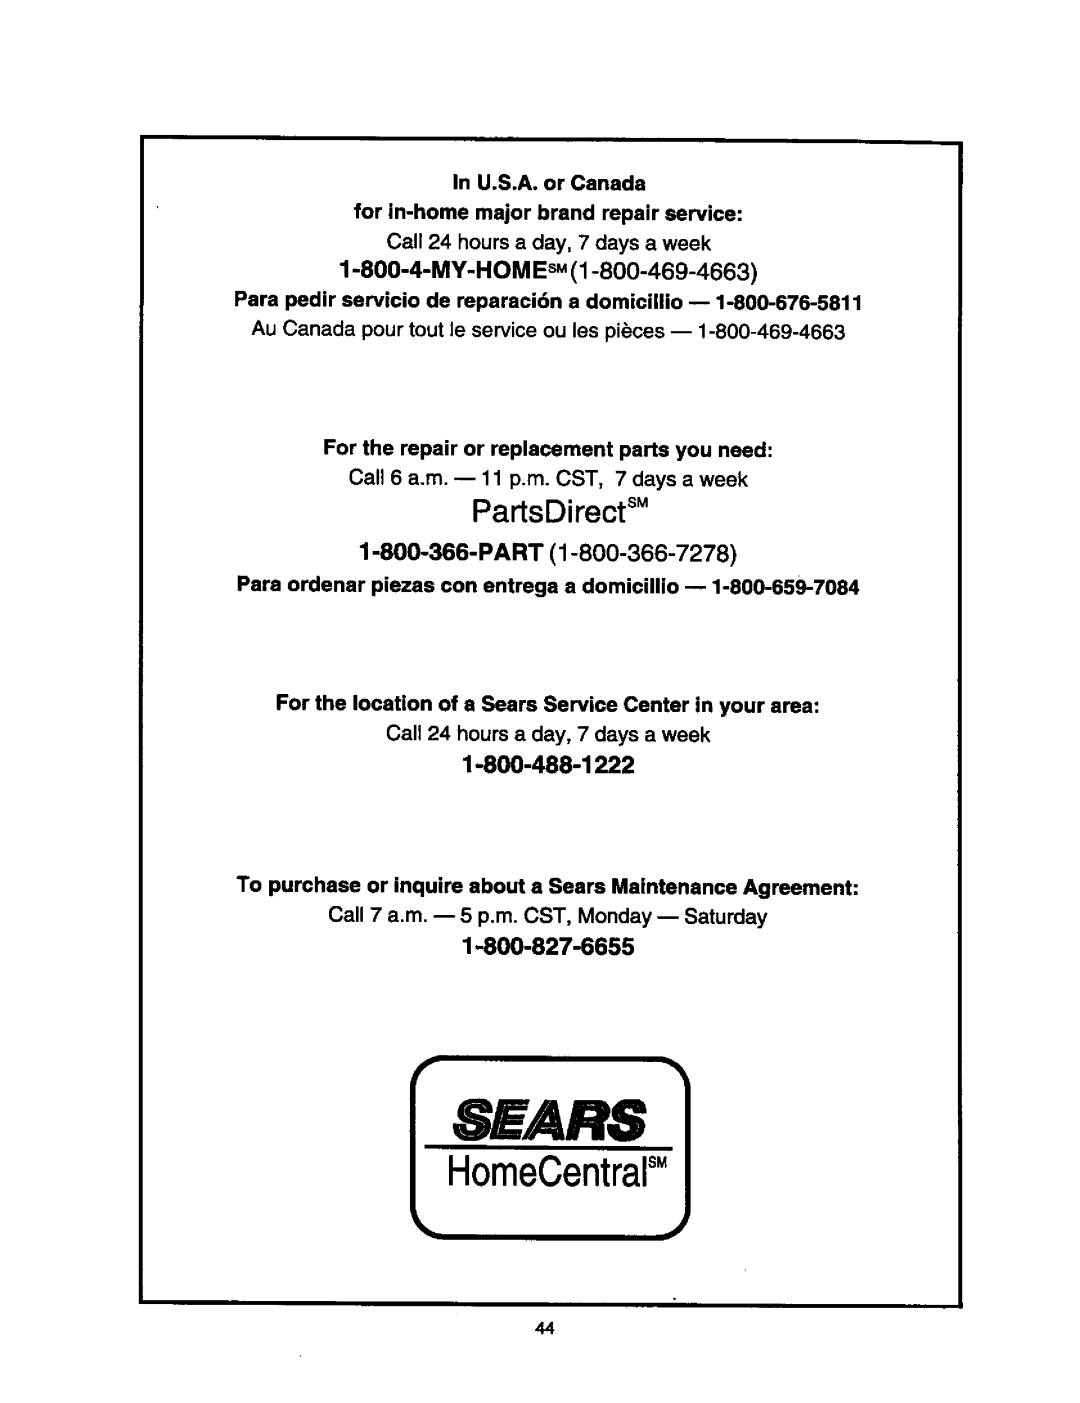 Craftsman 247.79452 owner manual PartsDirectsM, Sears, HomeCentrar 